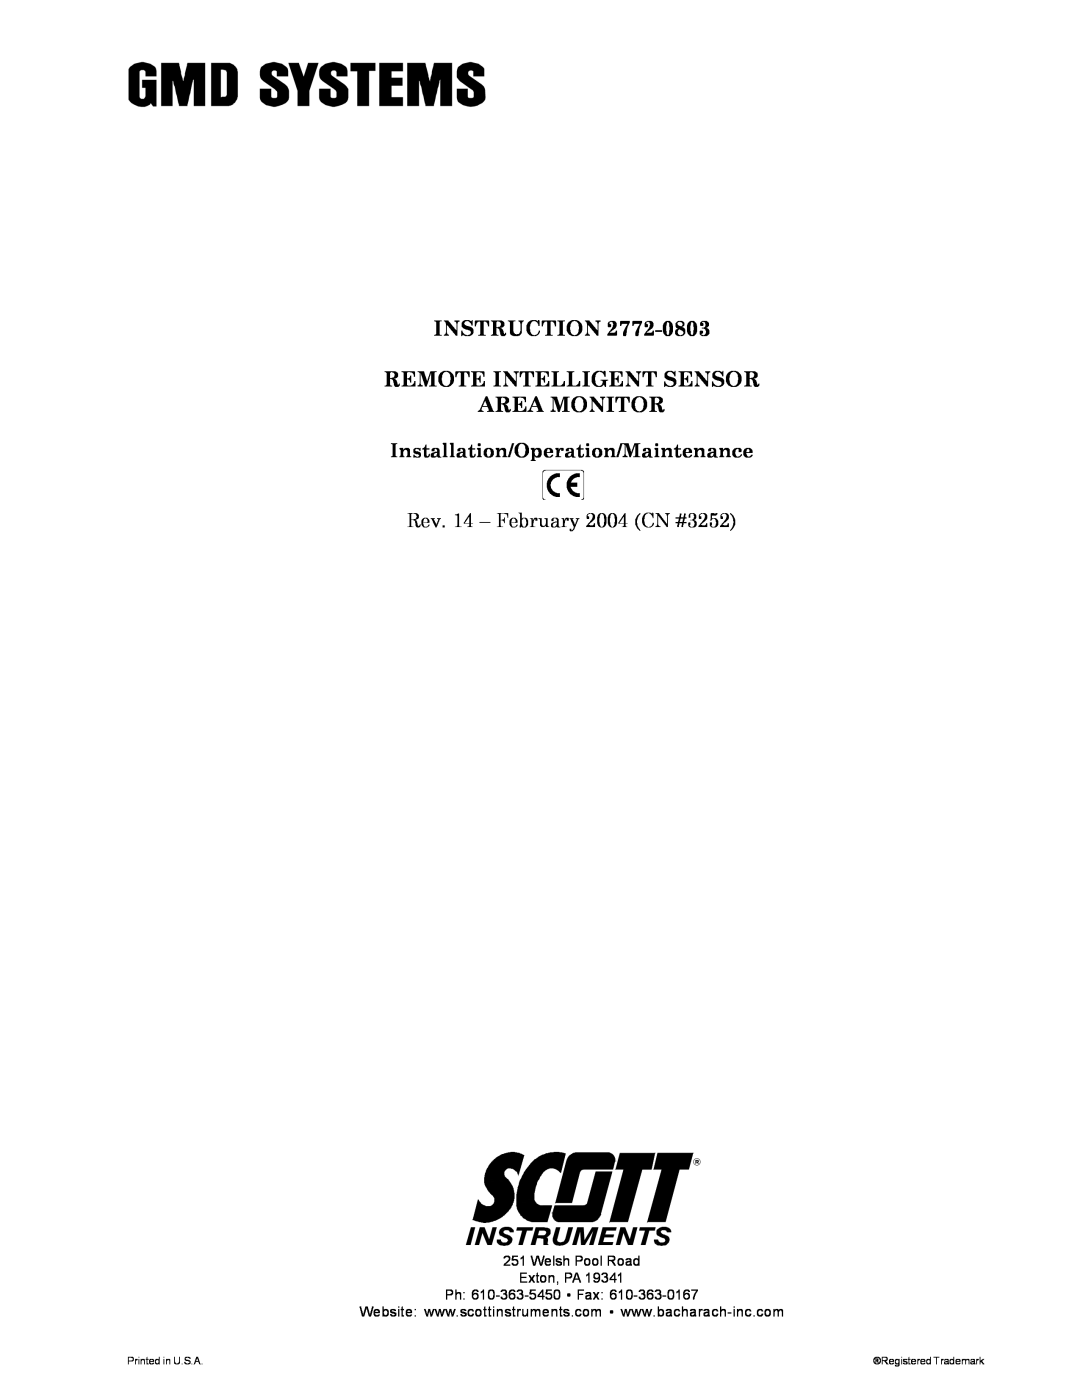 Bacharach 2772-0803 manual Rev. 14 - February 2004 CN #3252, Instruction Remote Intelligent Sensor Area Monitor 